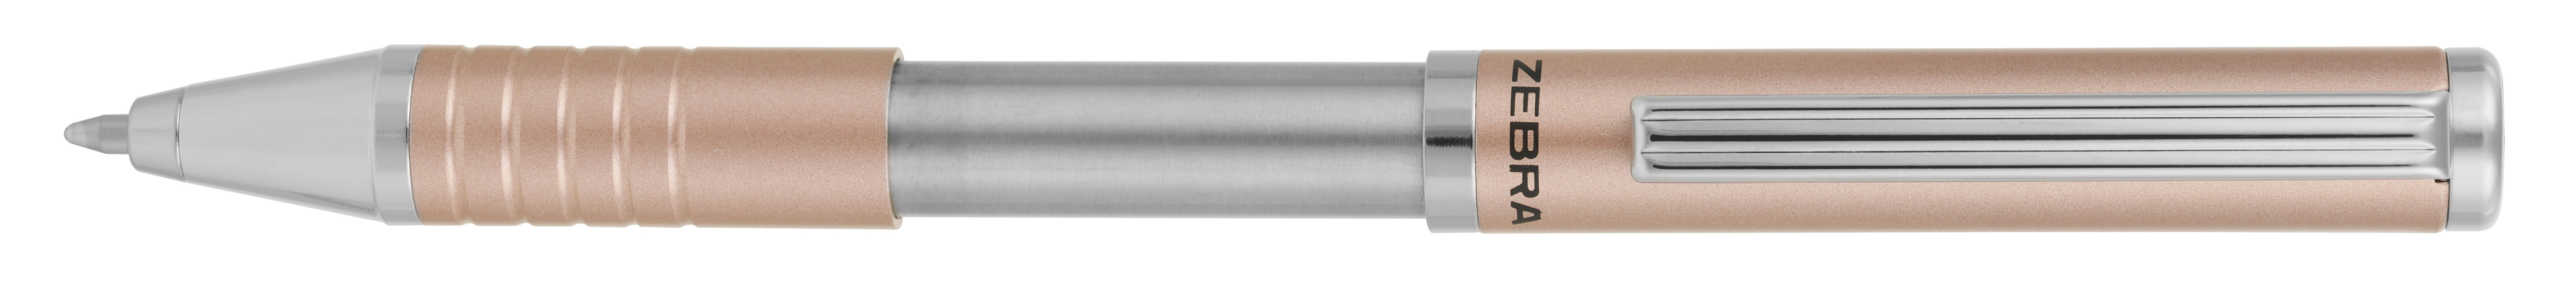 SL-F1 zebra expandable ballpoint pen 1